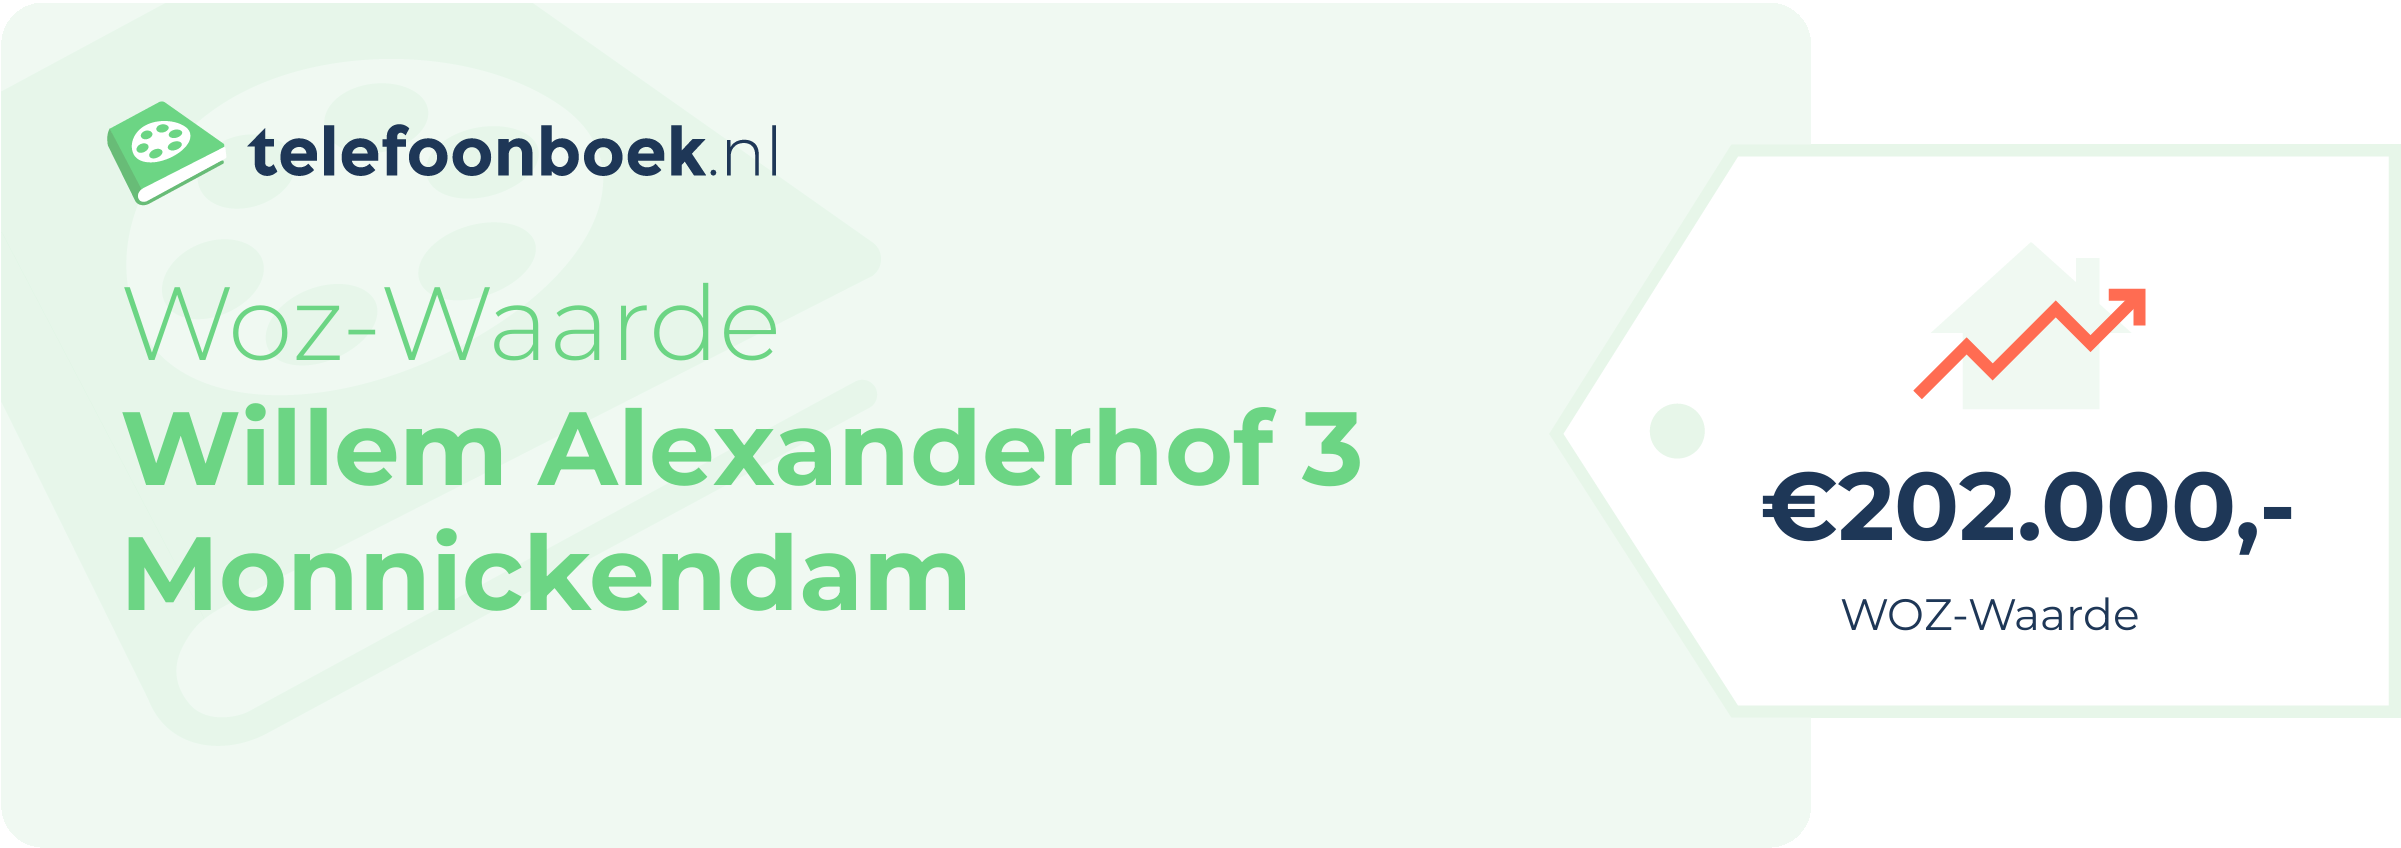 WOZ-waarde Willem Alexanderhof 3 Monnickendam